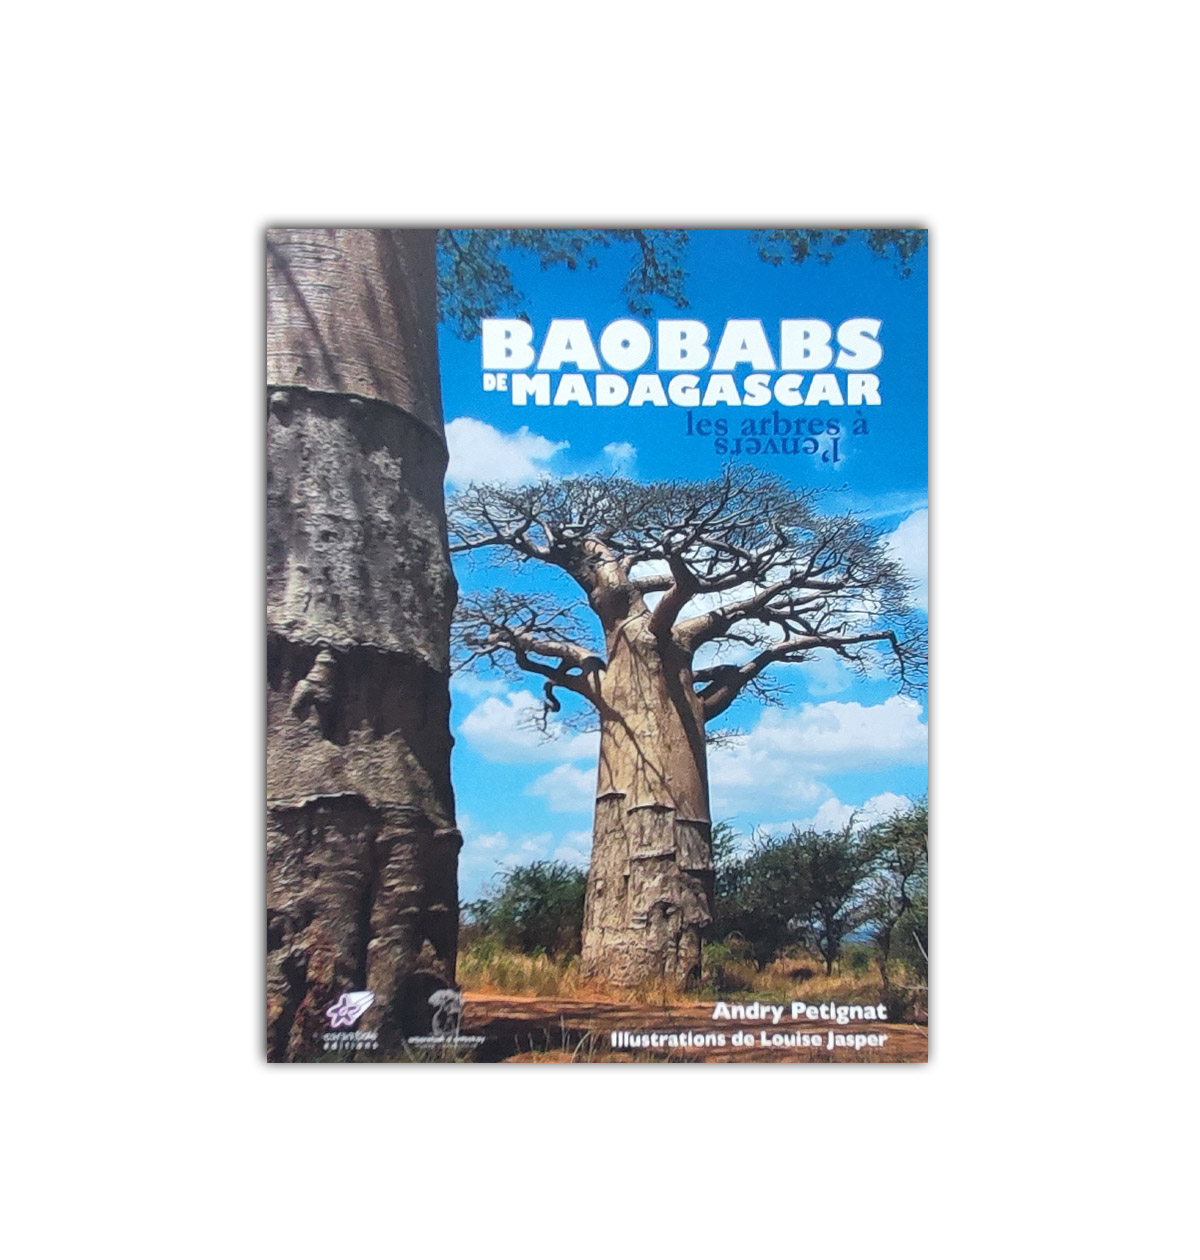 Baobabs de madagascar: les arbres à l'envers